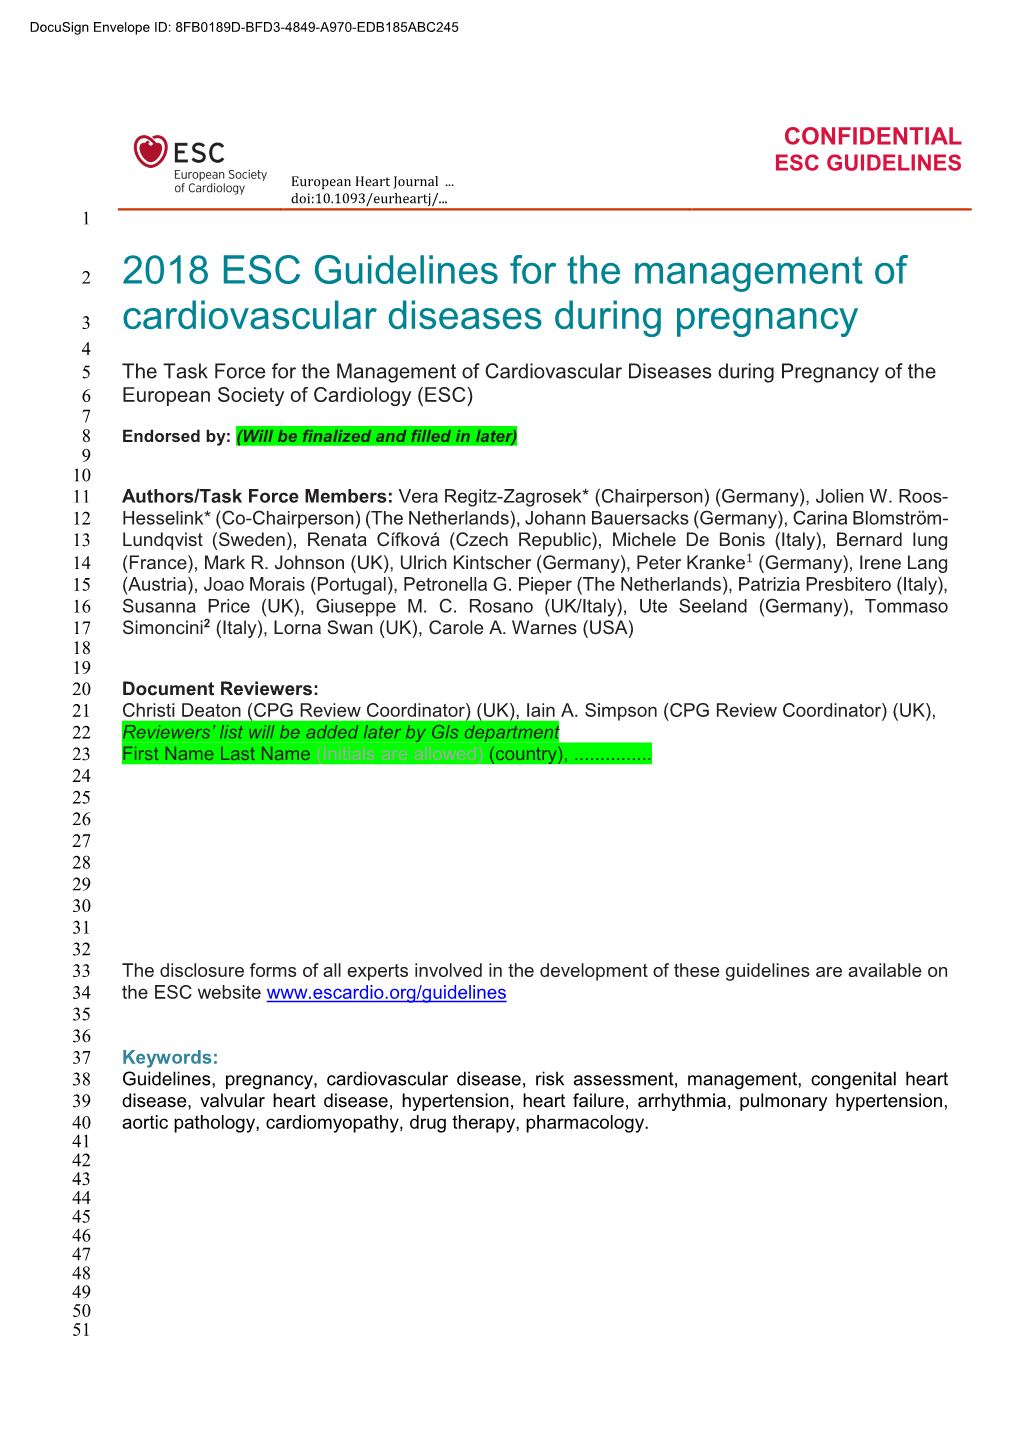 2018 ESC Gls Pregnancy Mastercopy for Publication Approval